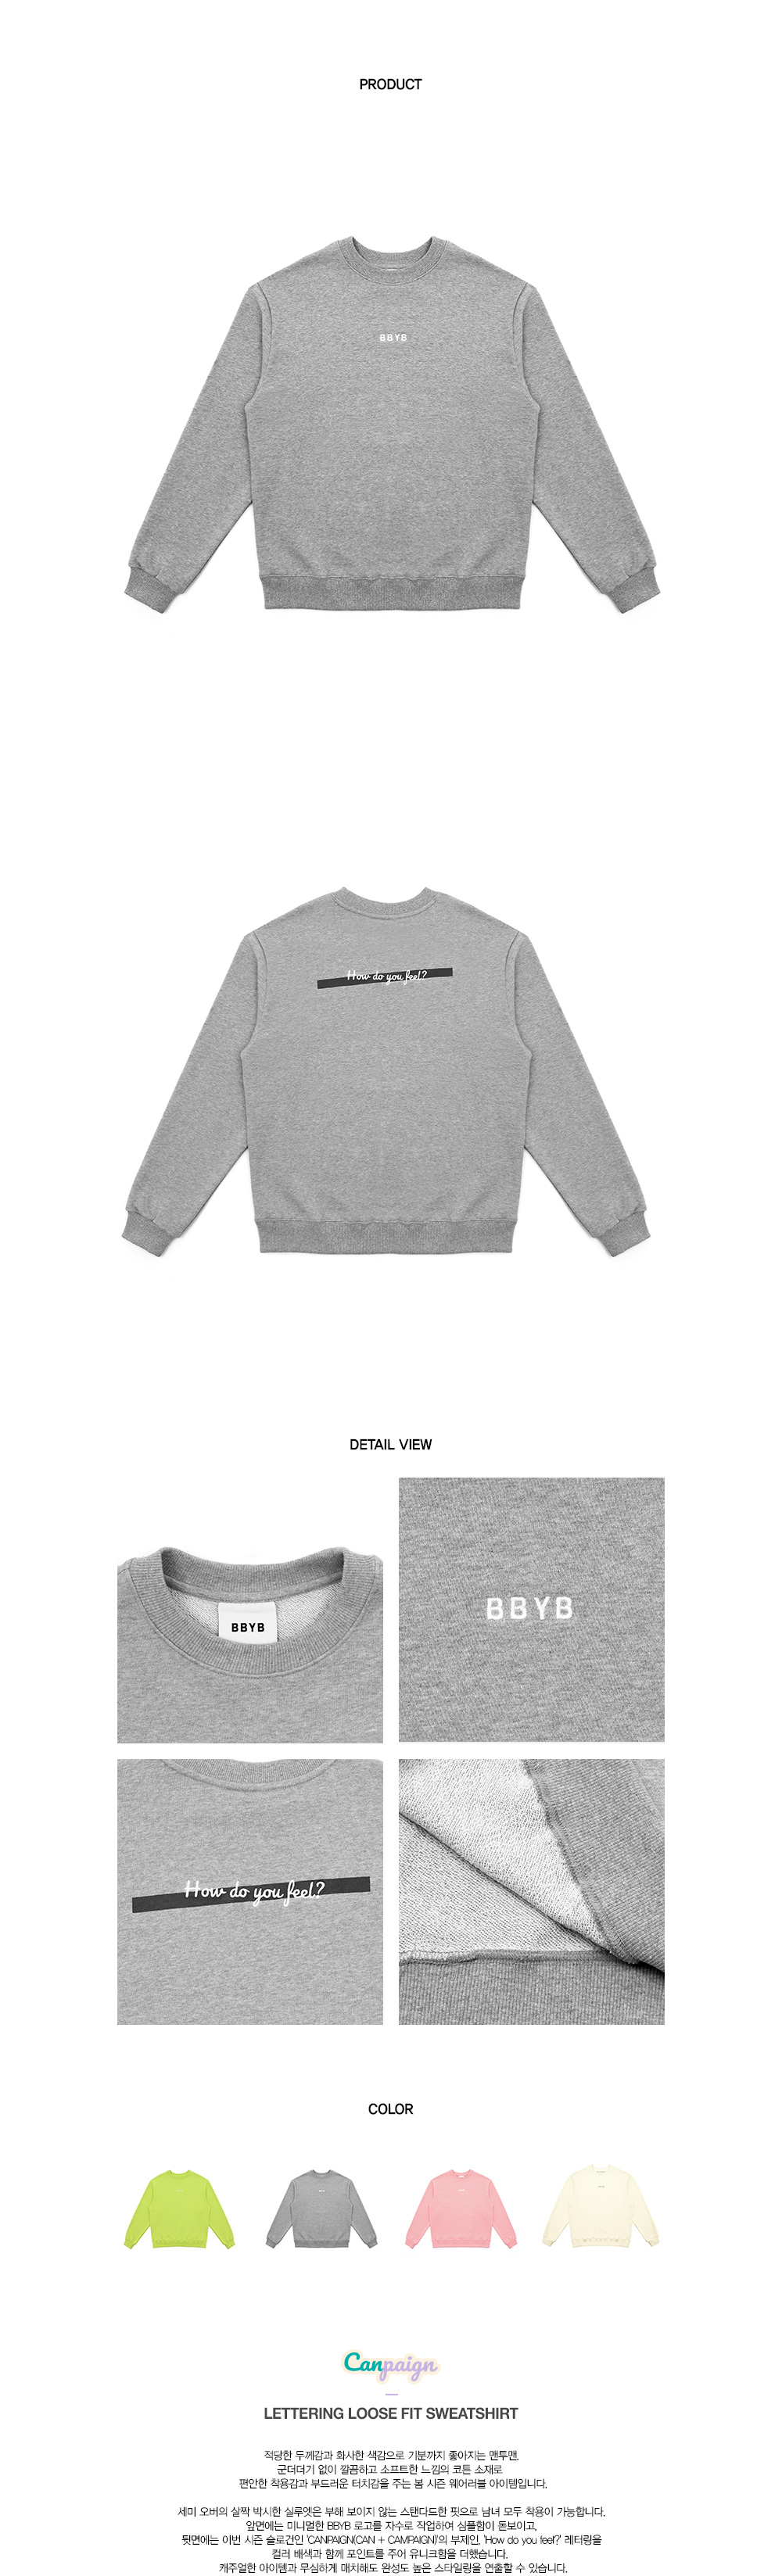 BBYB Lettering Loose Fit Sweatshirt (Grey)